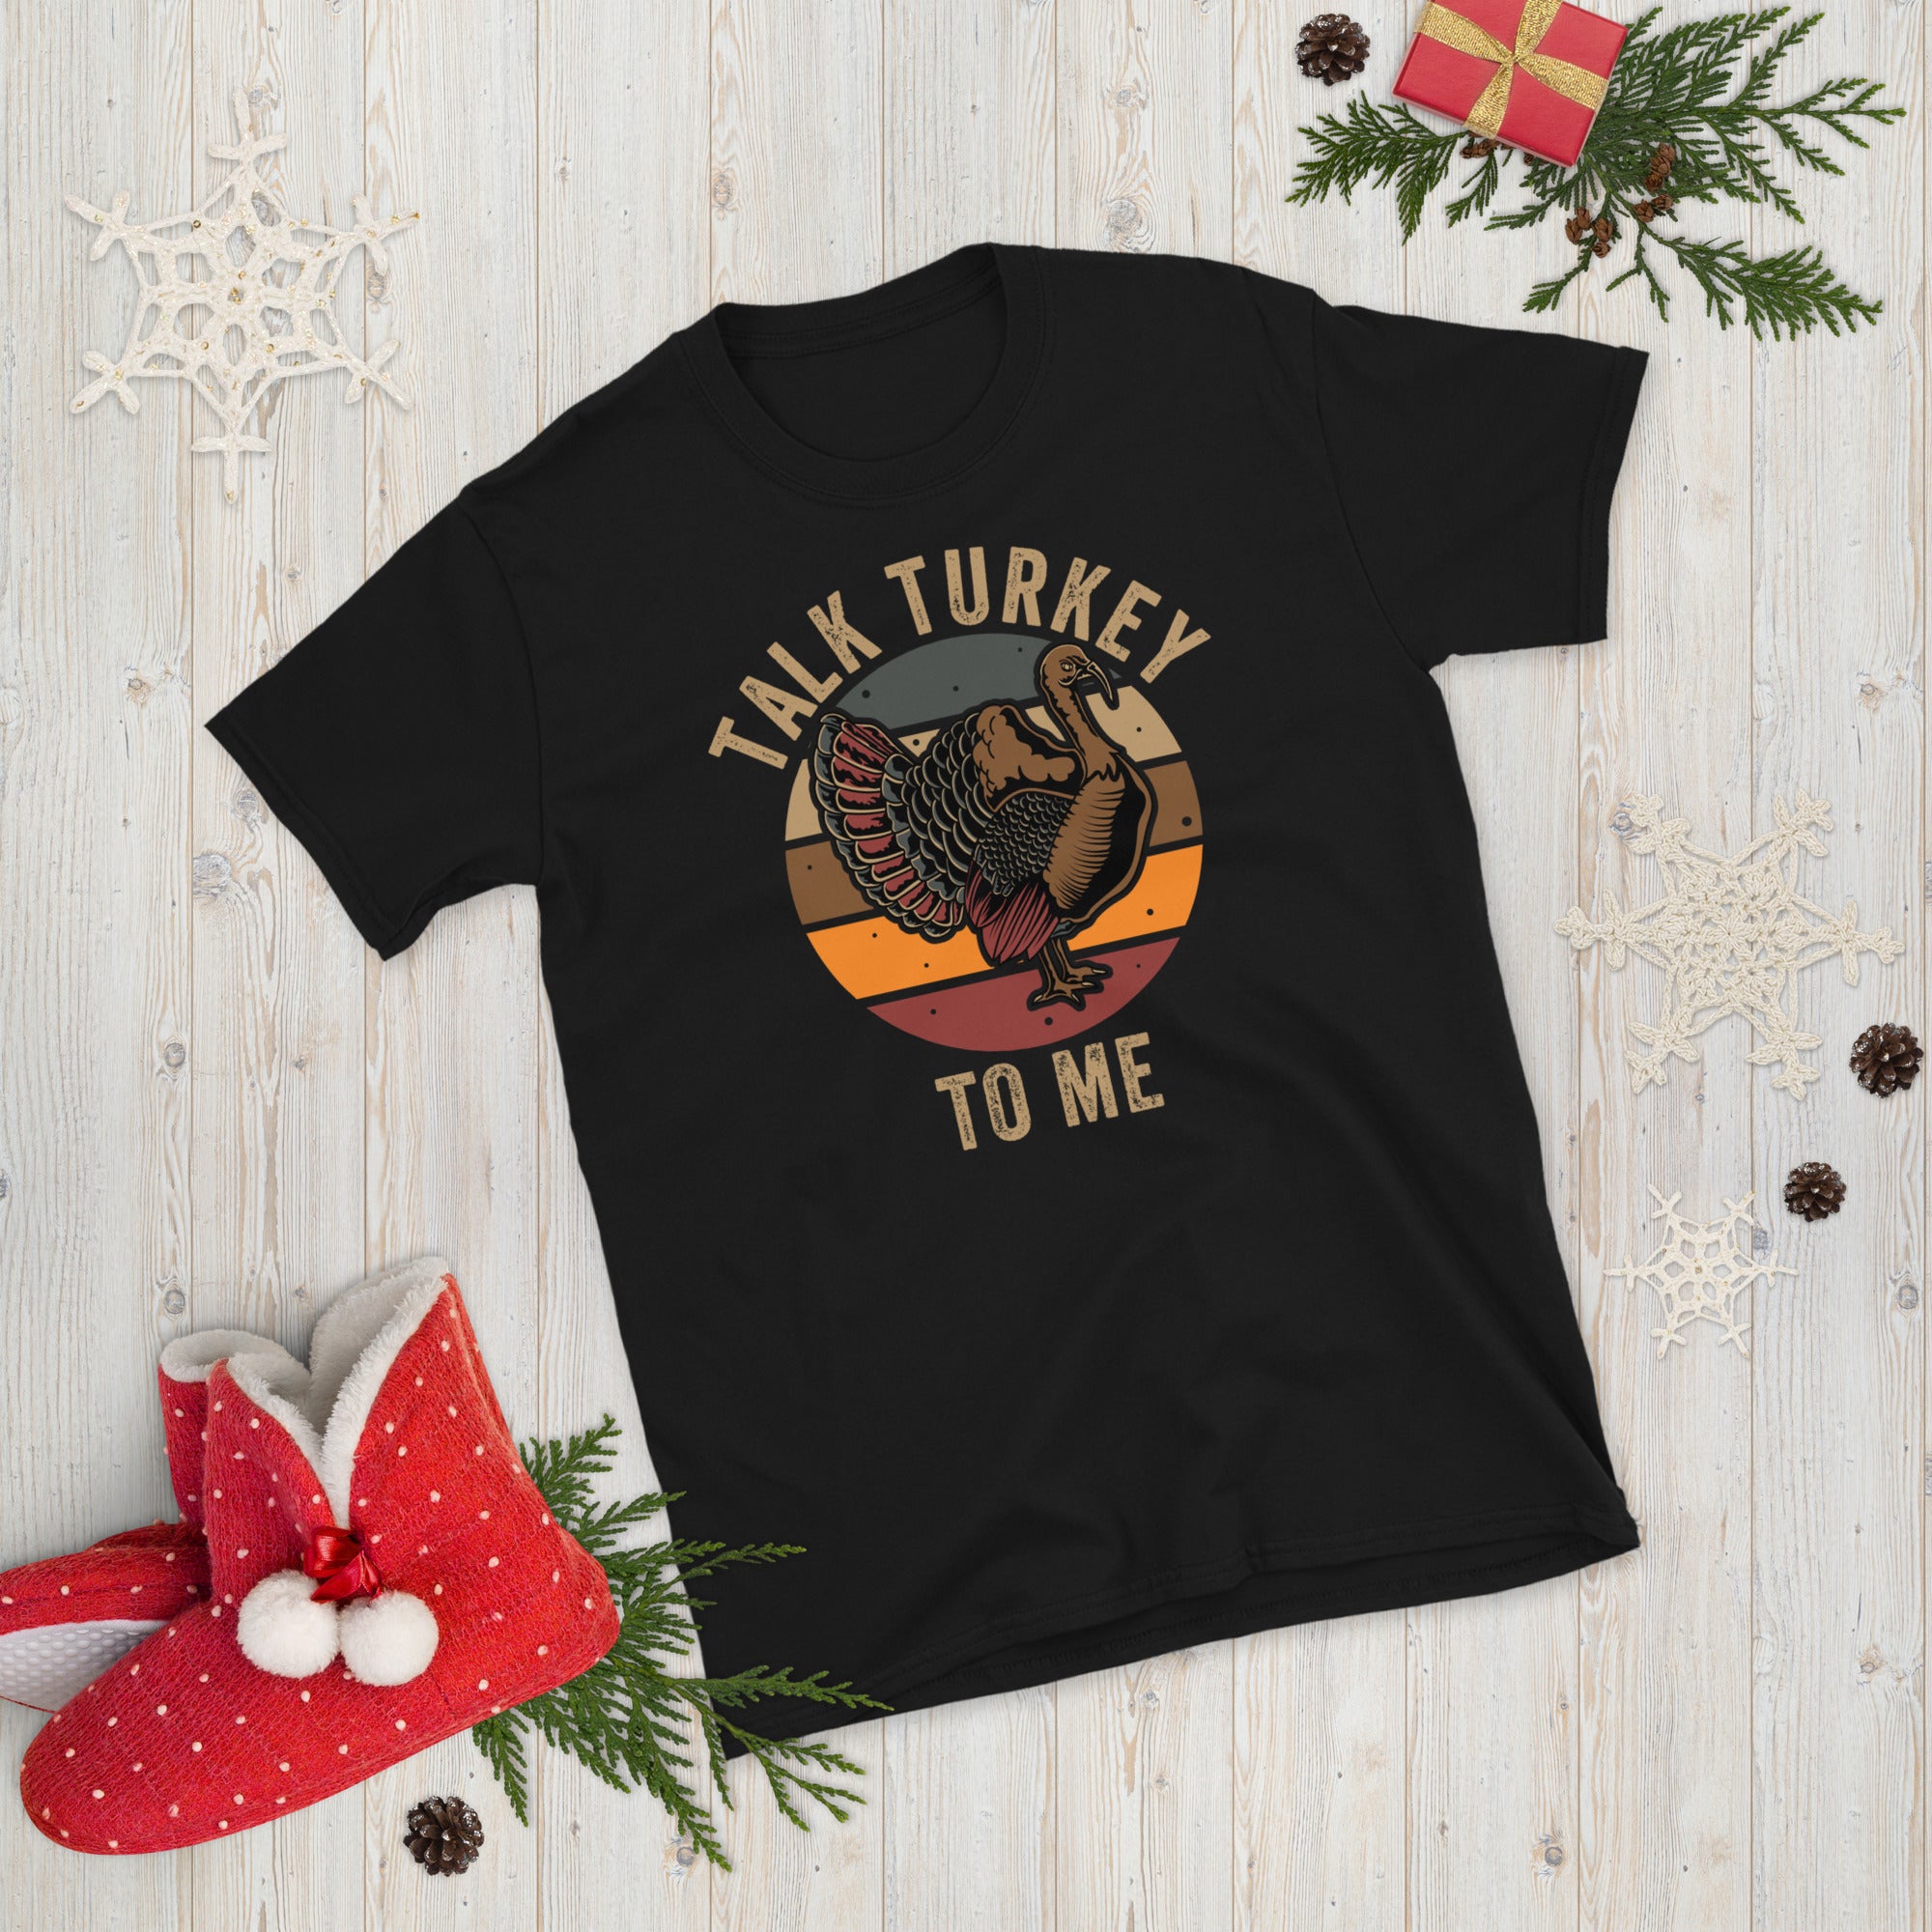 Talk Turkey To Me Shirt, Thanksgiving Shirt, Funny Thanksgiving TShirt, Thanksgiving Dinner Shirt, Turkey Shirt, Family Thanksgiving Shirt - Madeinsea©